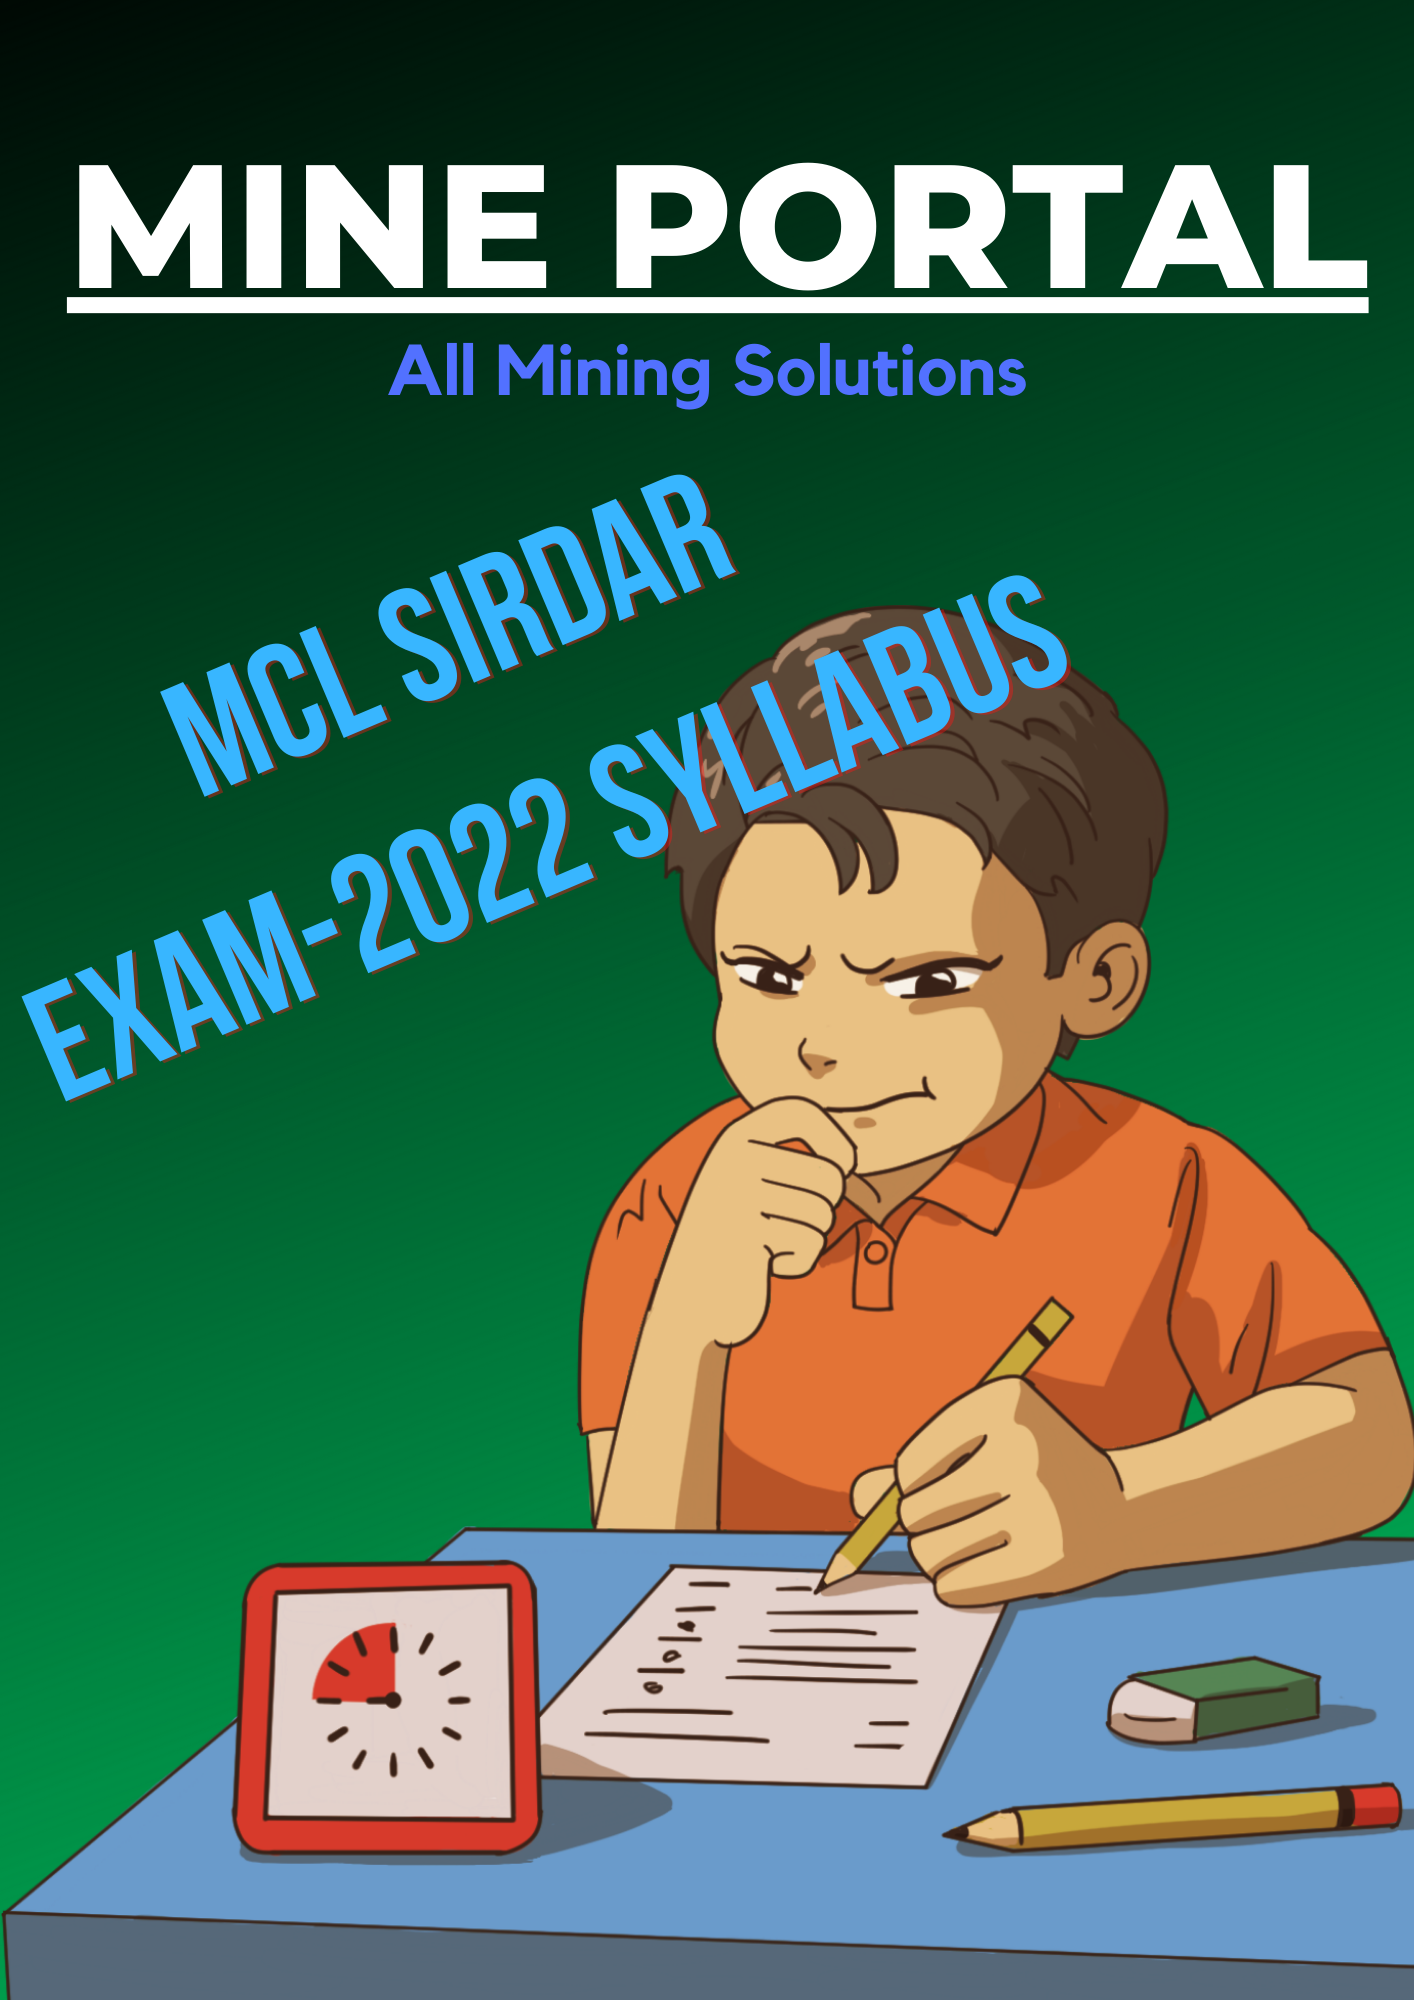 MCL MINING SIRDAR -2022 EXAM SYLLABUS